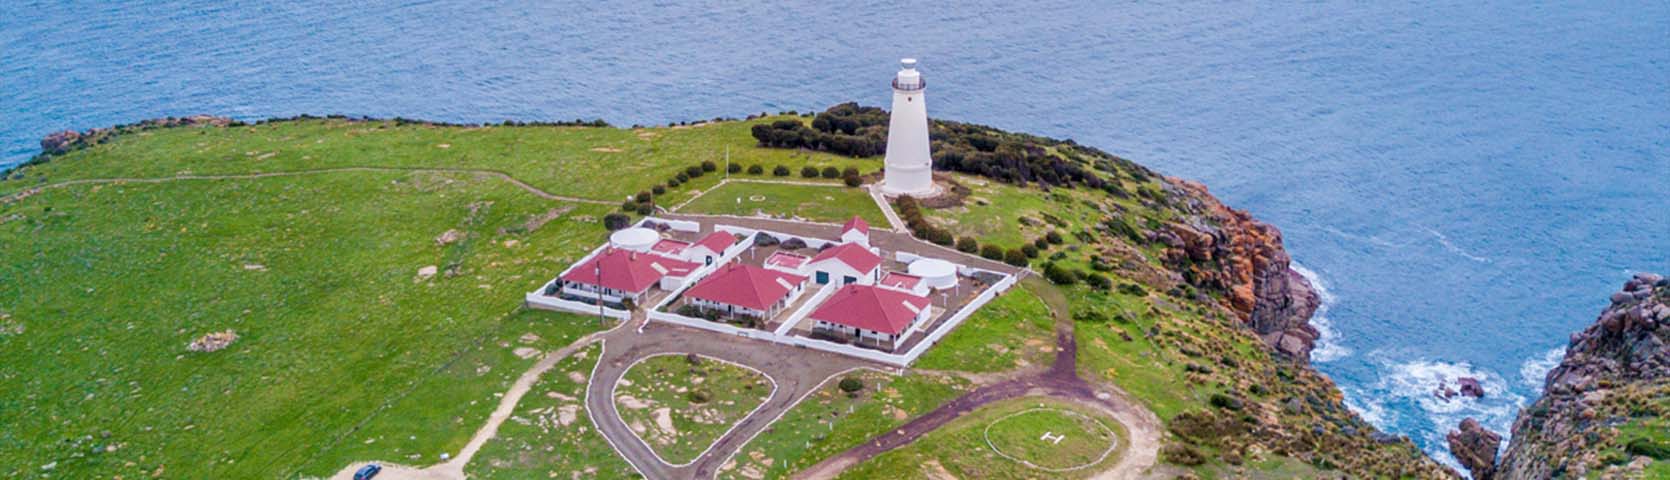 Cape Willoughby lighthouse Kangaroo Island